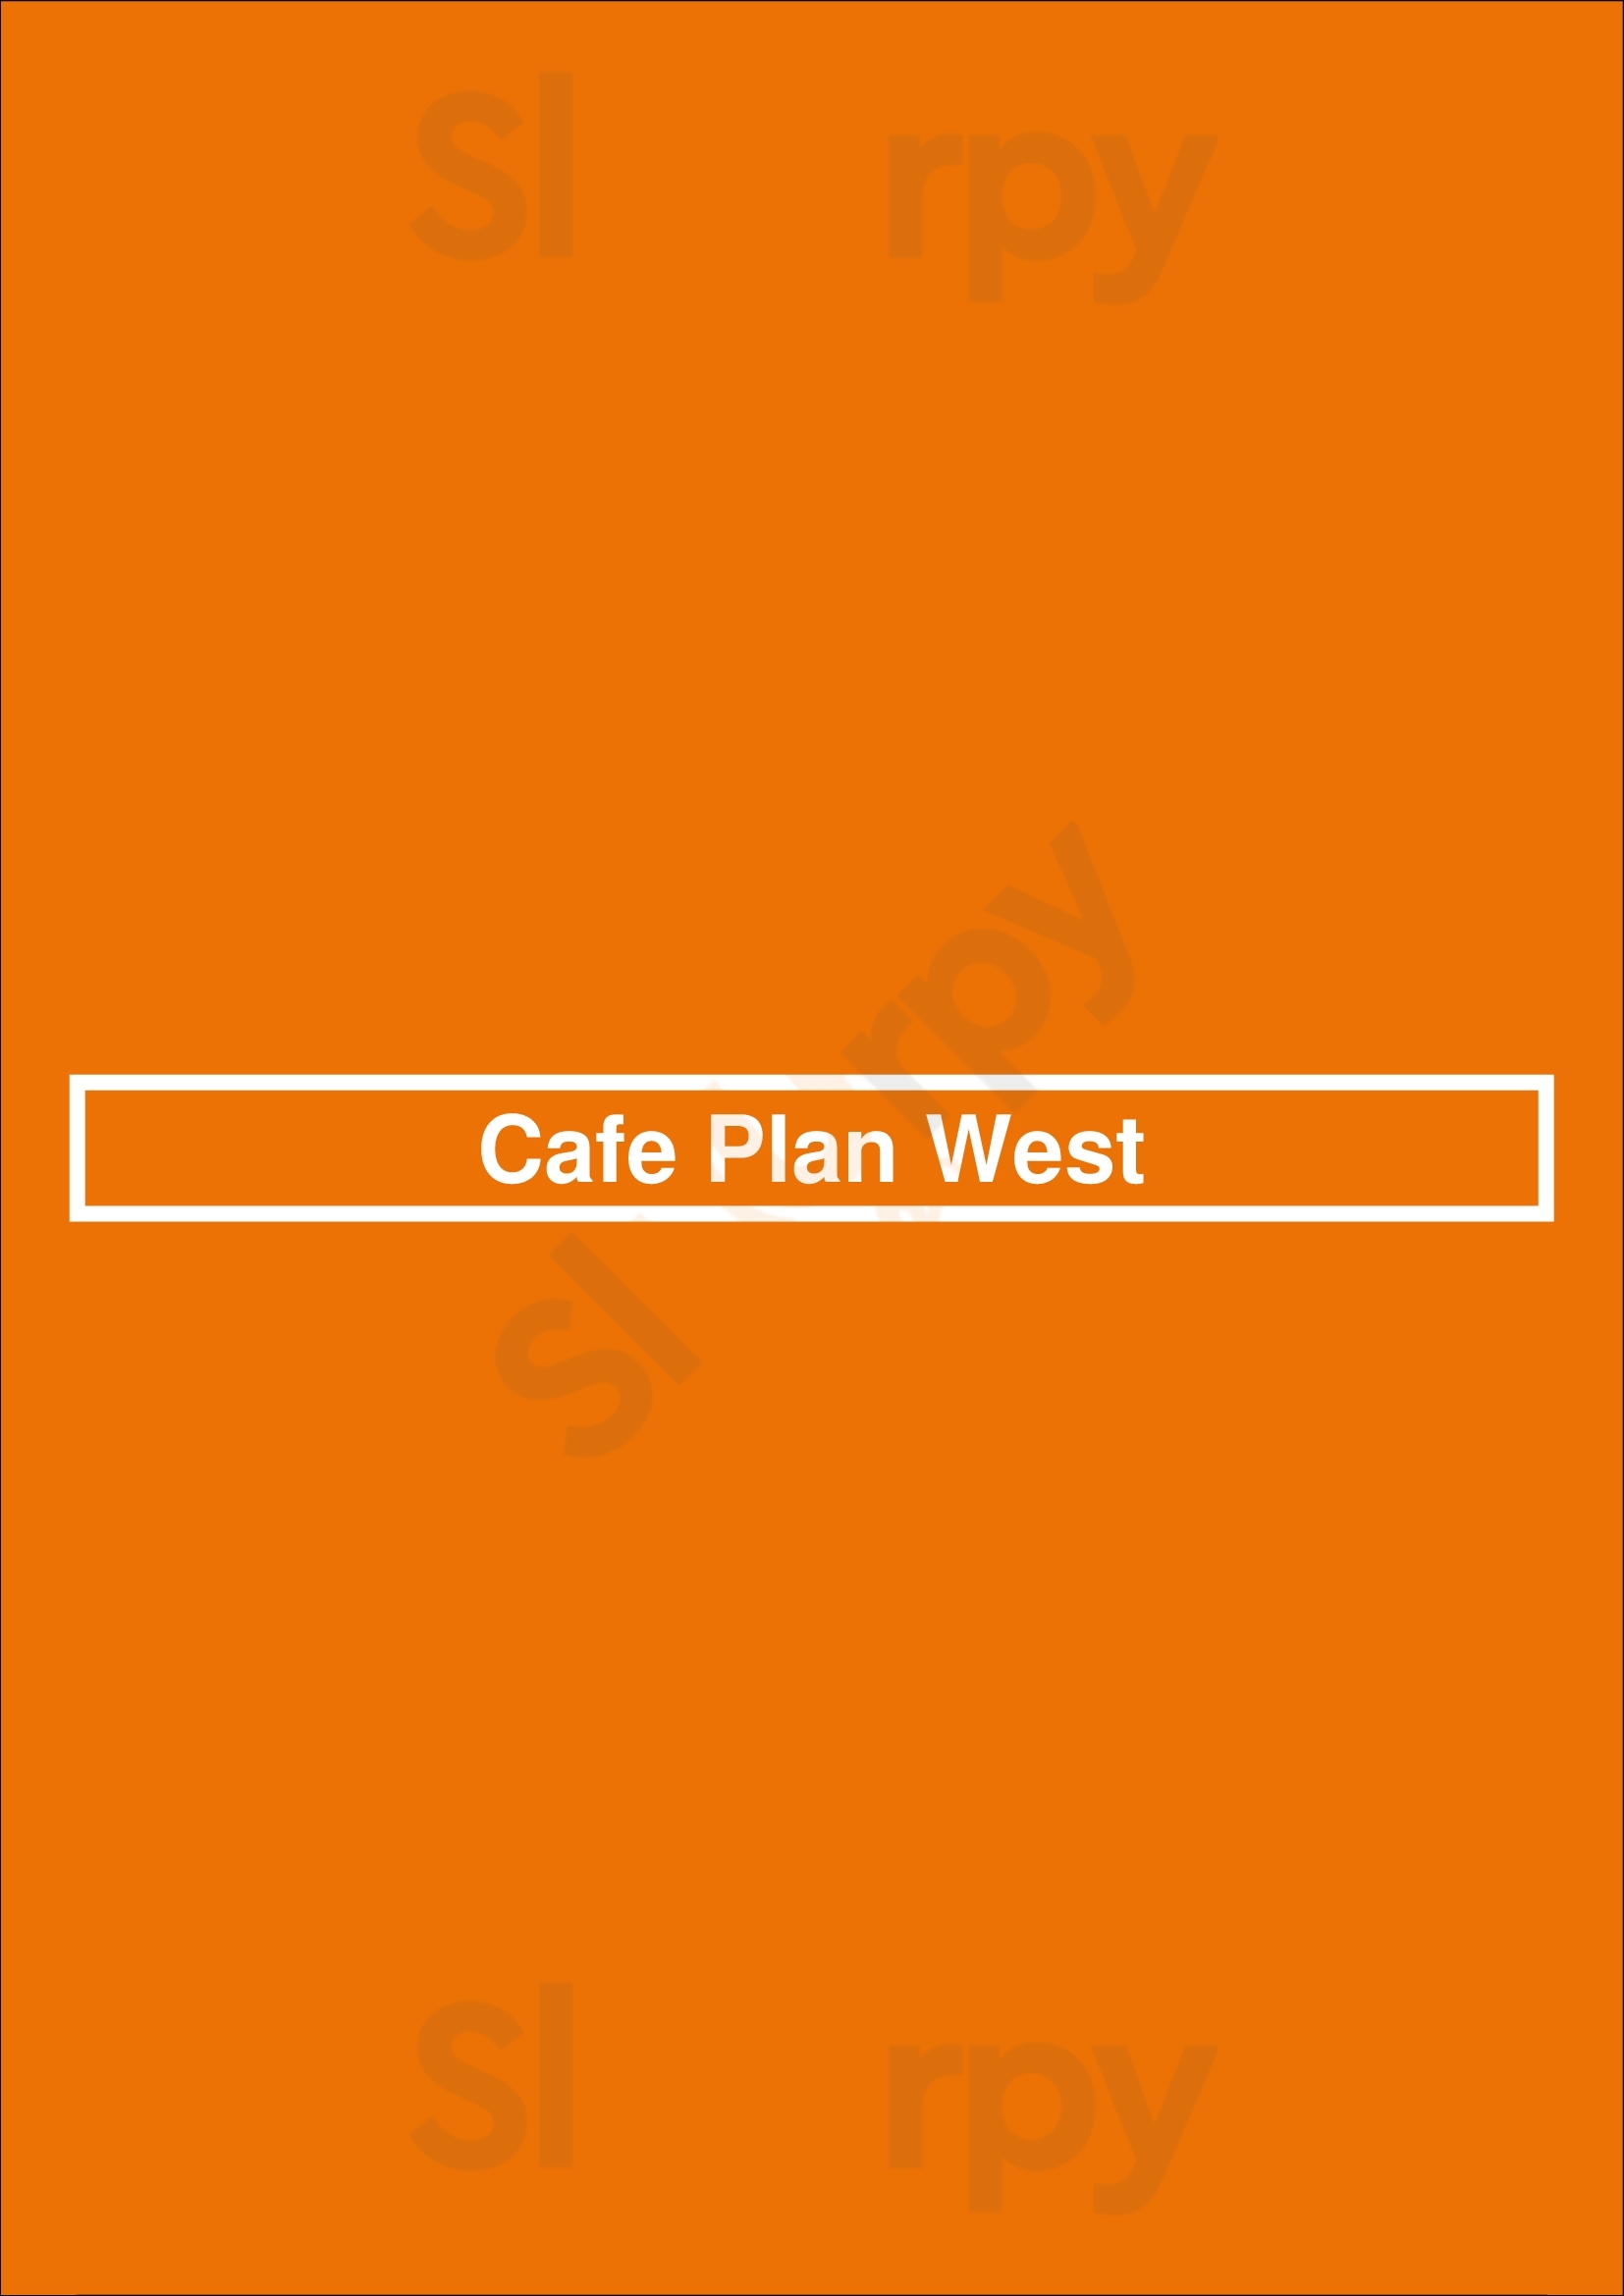 Cafe Plan West Amsterdam Menu - 1